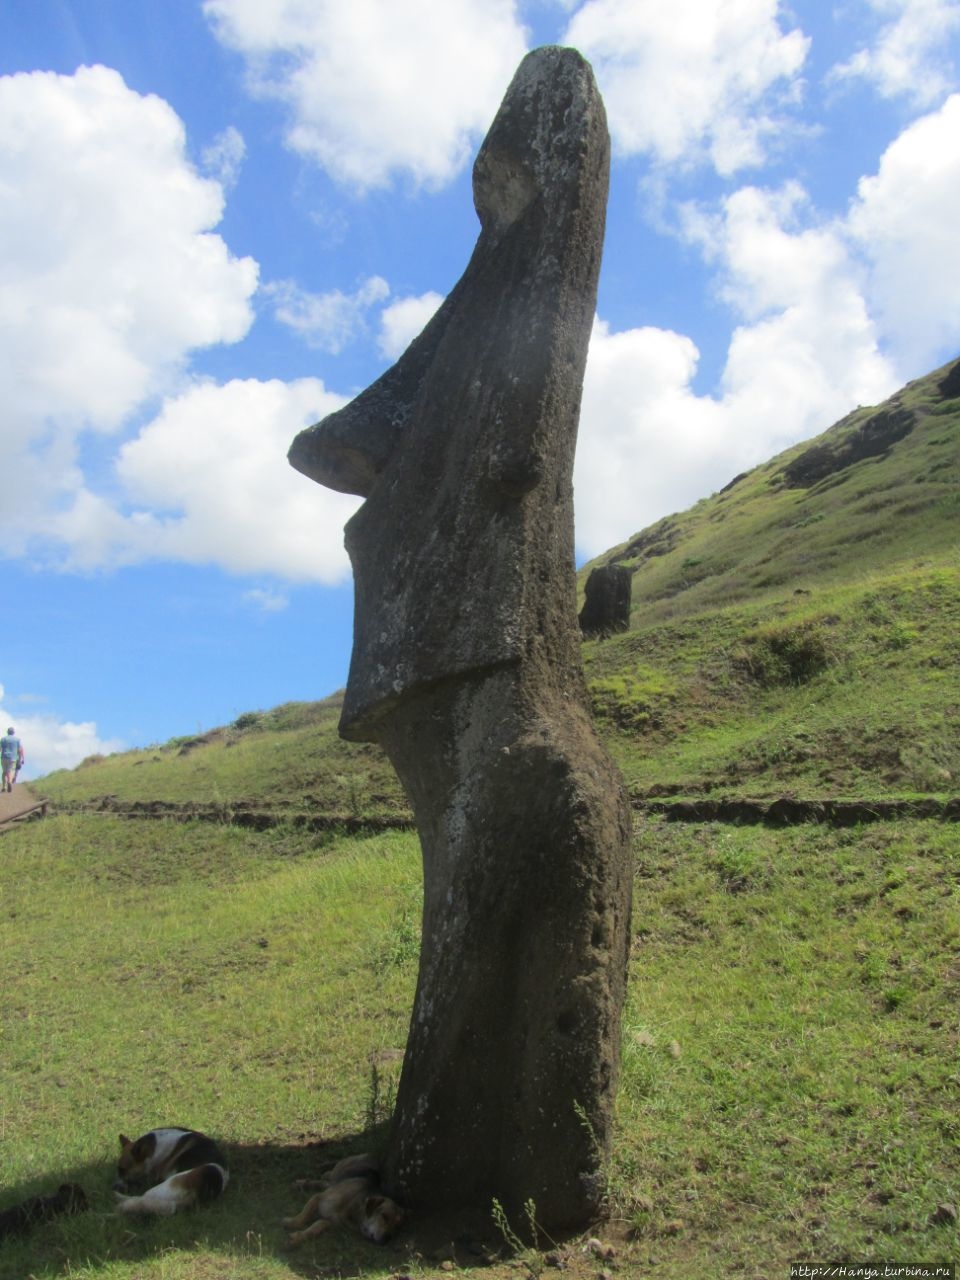 Рано Рараку – колыбель гигантских  моаи. Ч.69